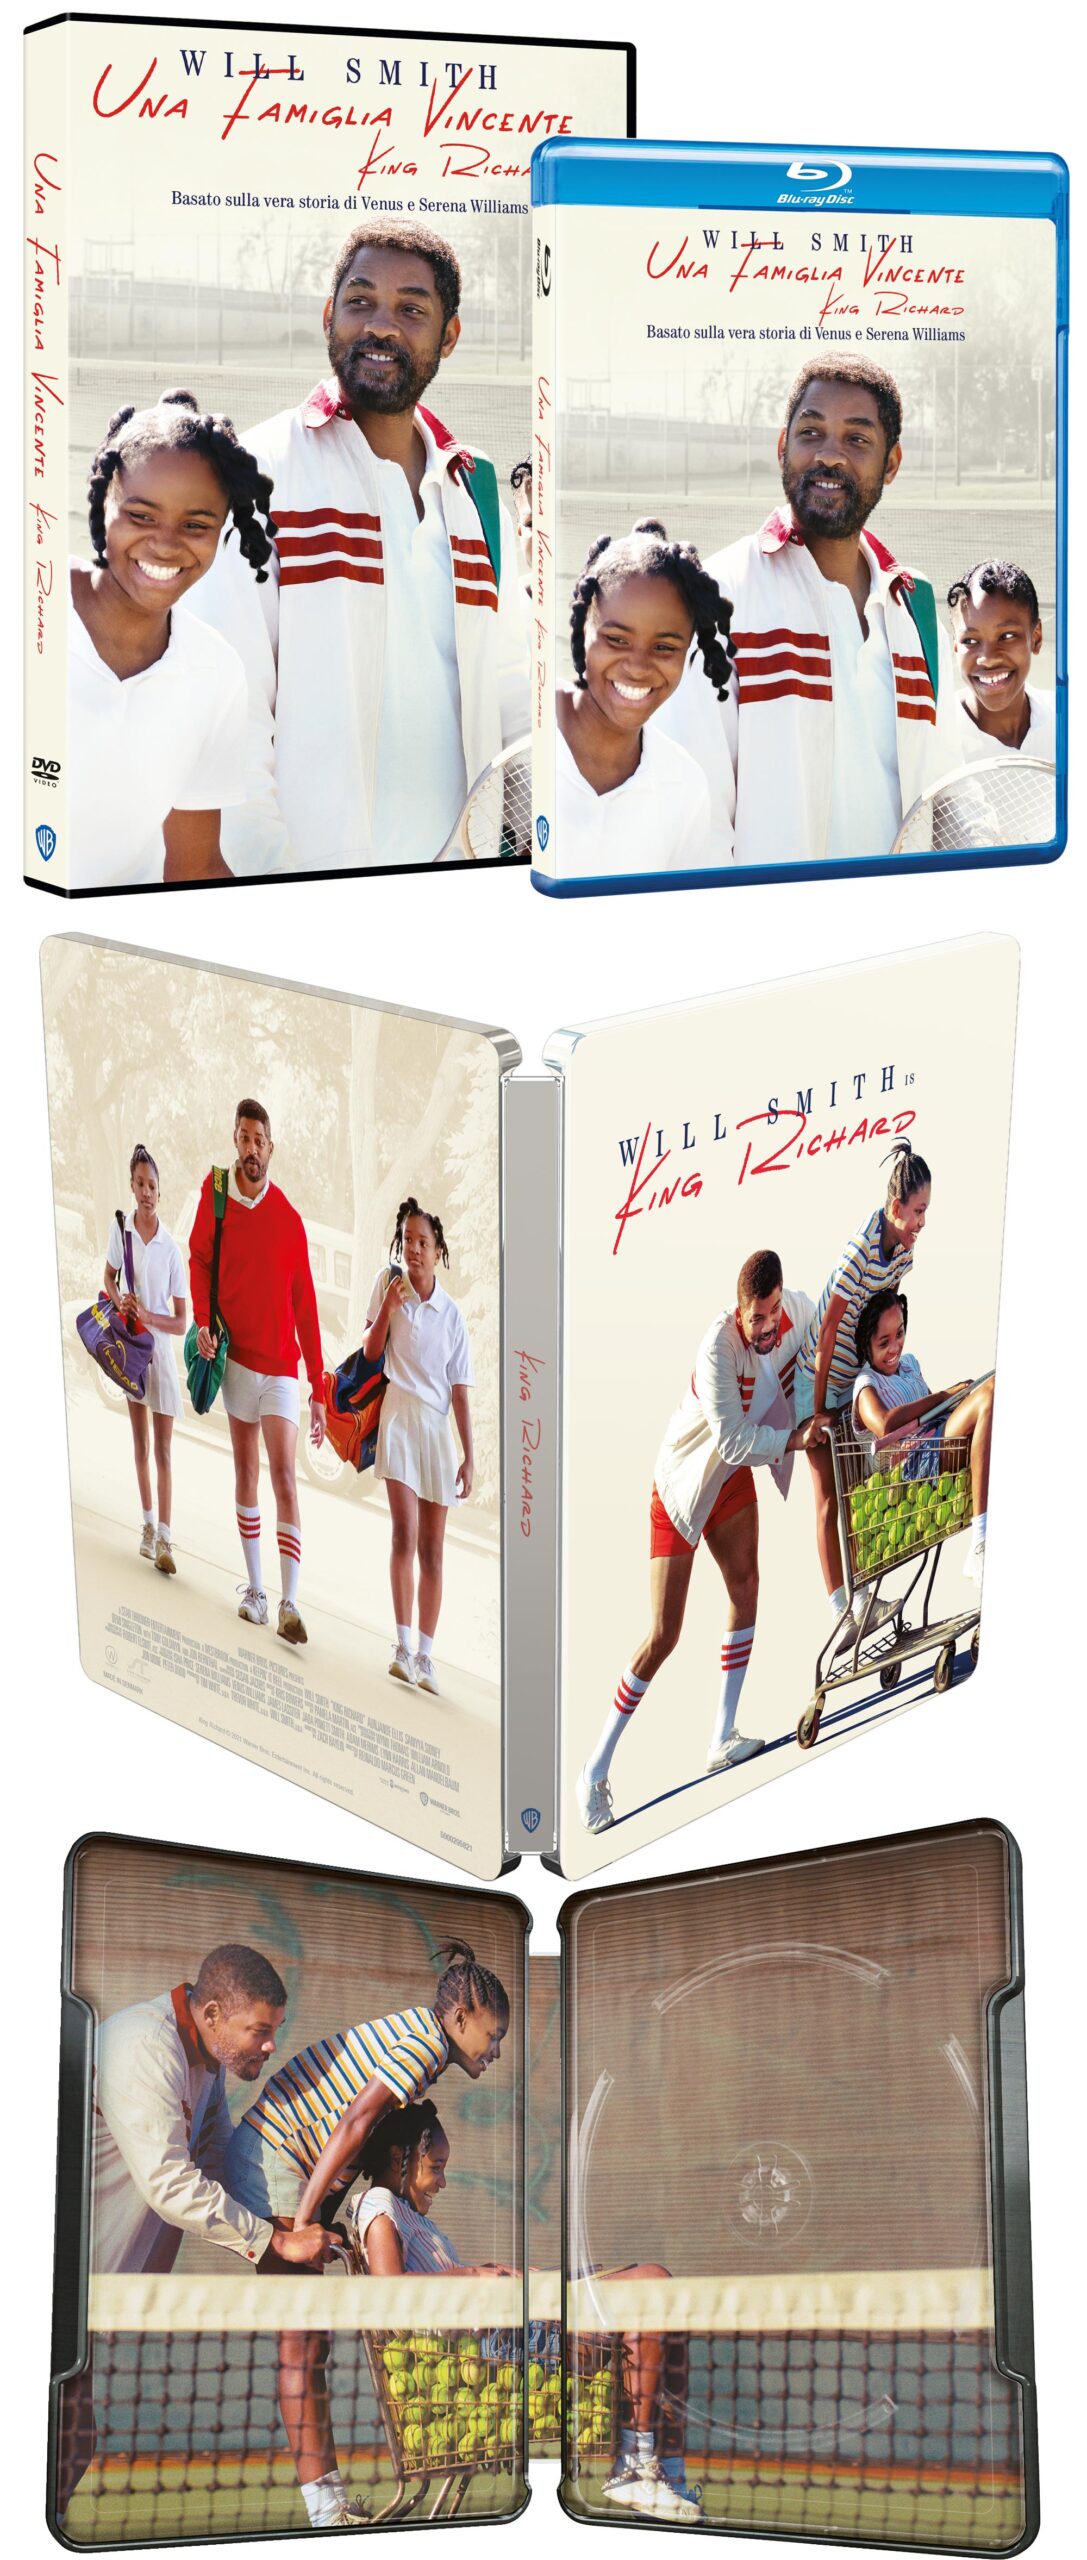 Una famiglia vincente - King Richard in DVD, Blu-Ray e Steelbook Blu-ray